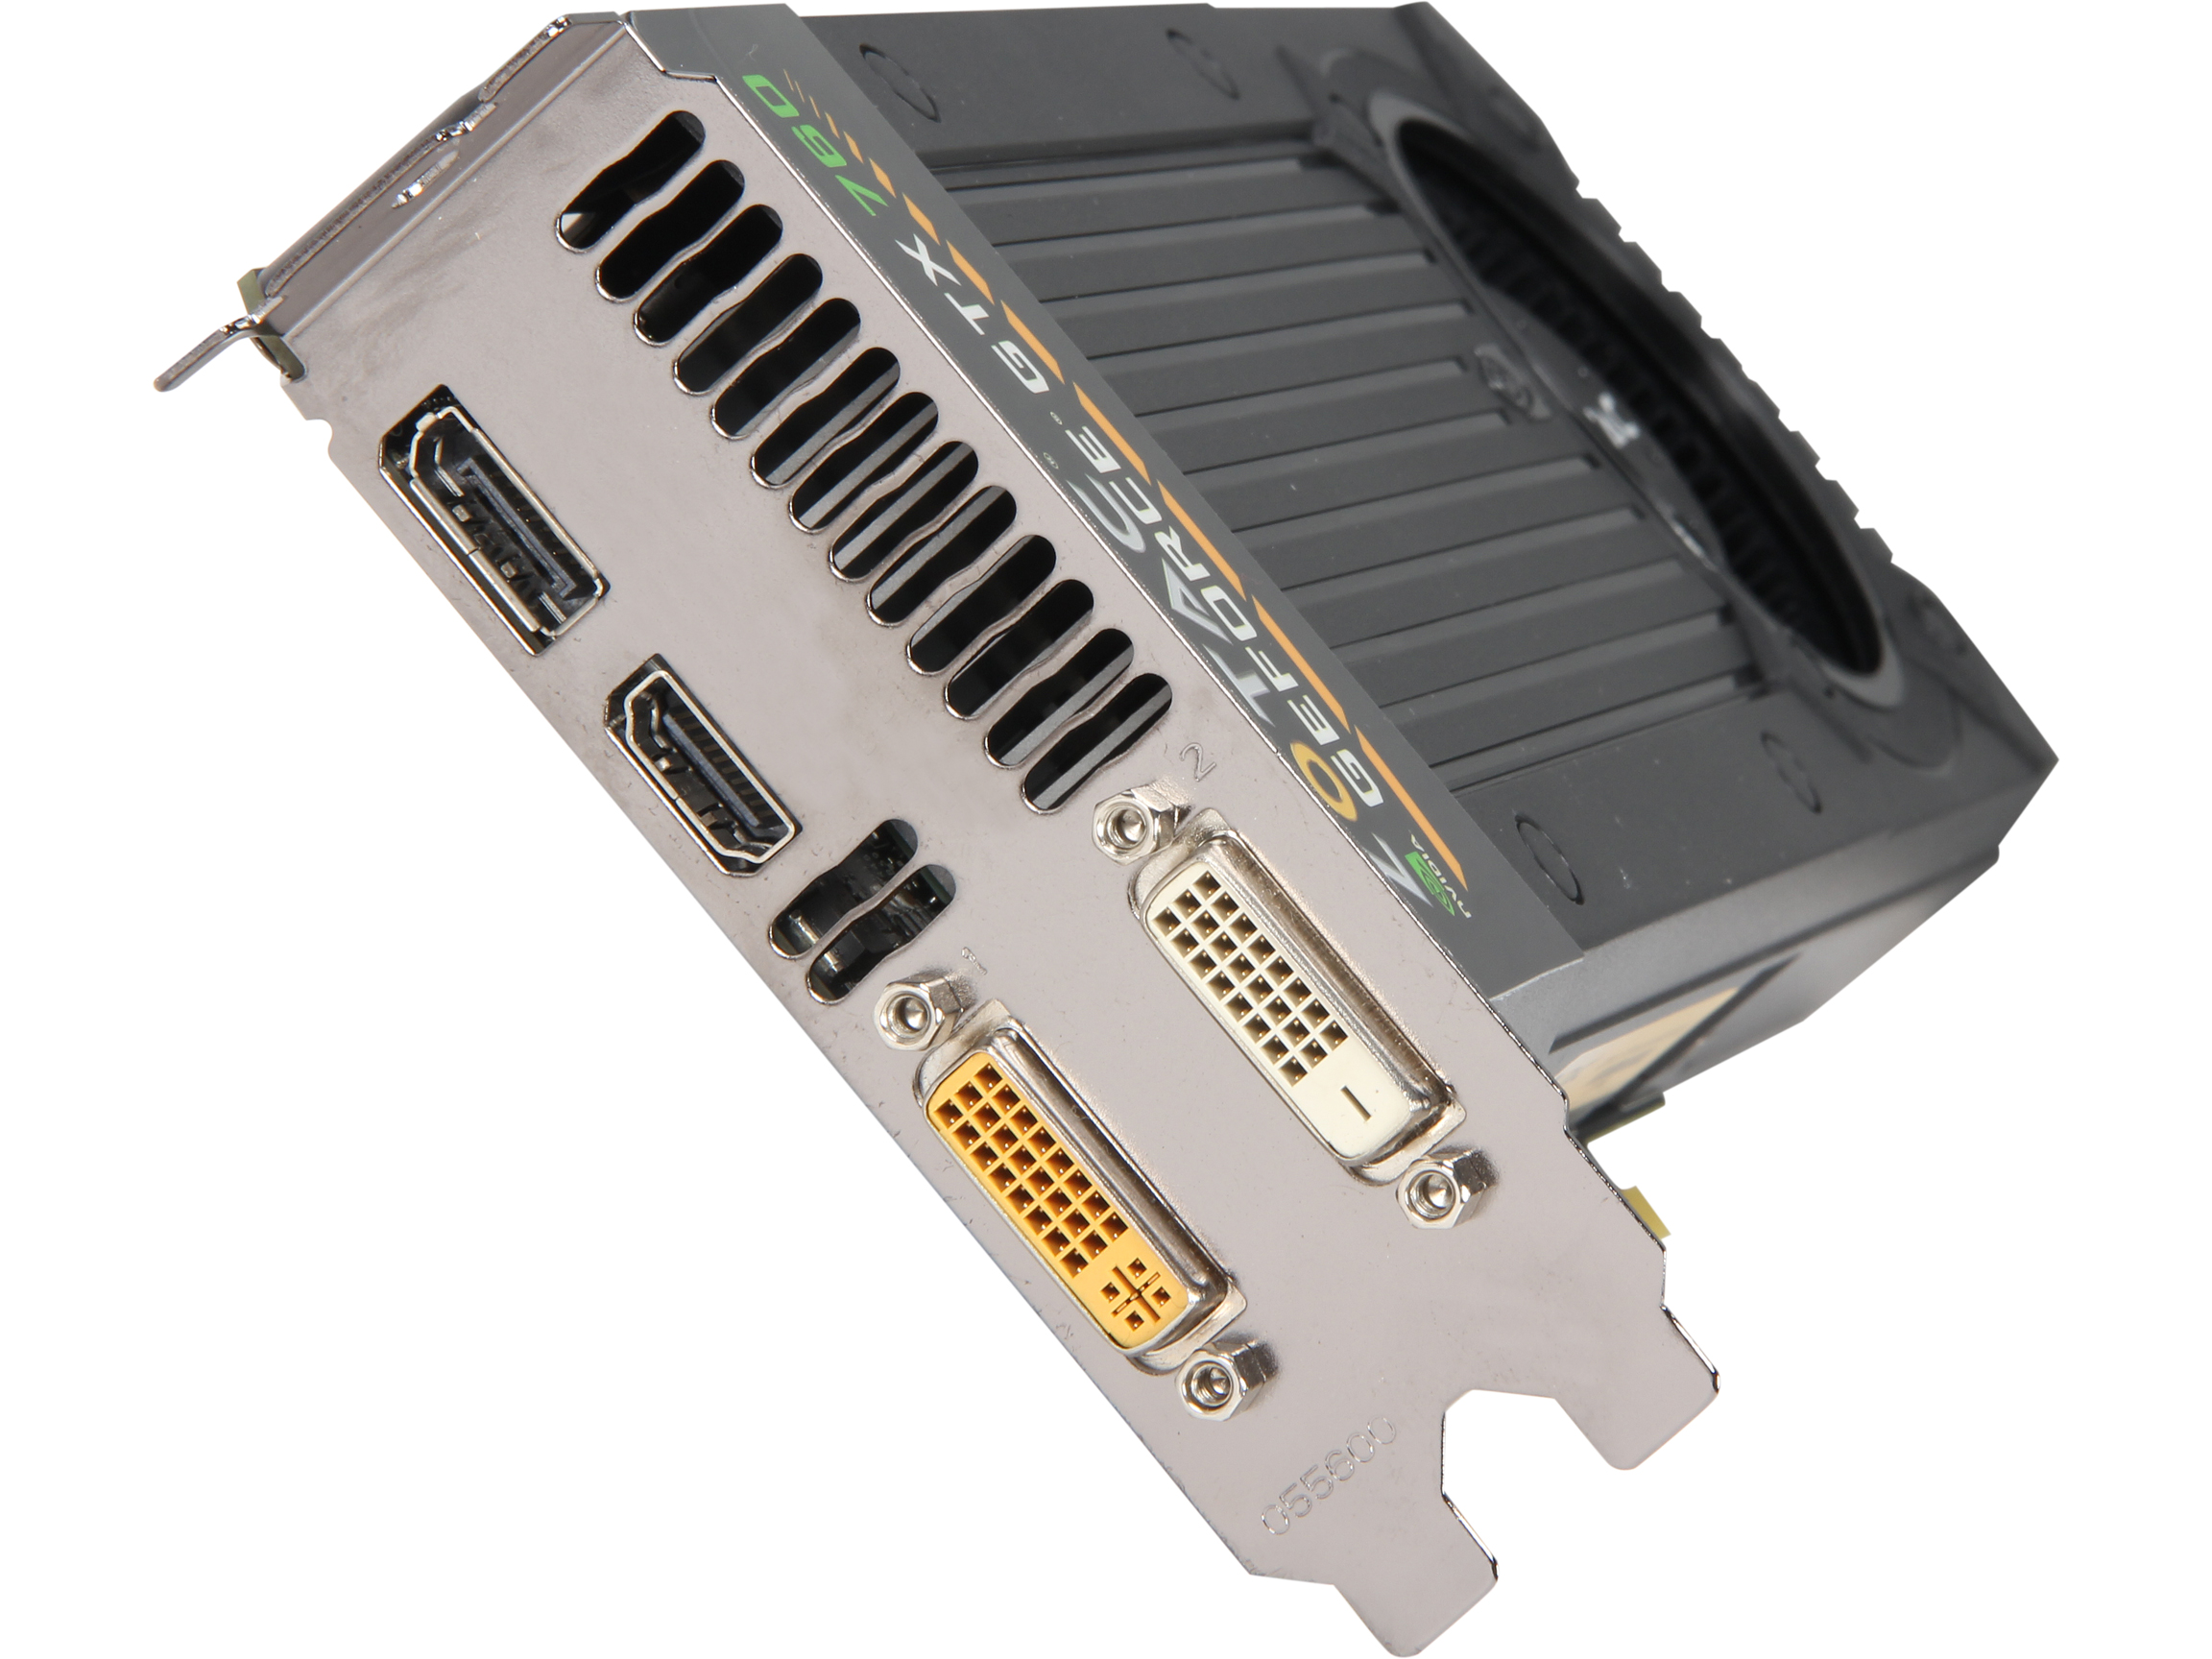 ZOTAC GeForce GTX 760 DirectX 12 ZT 70401 10P 2GB 256 Bit GDDR5 PCI Express 3.0 x16 SLI Support Video Card